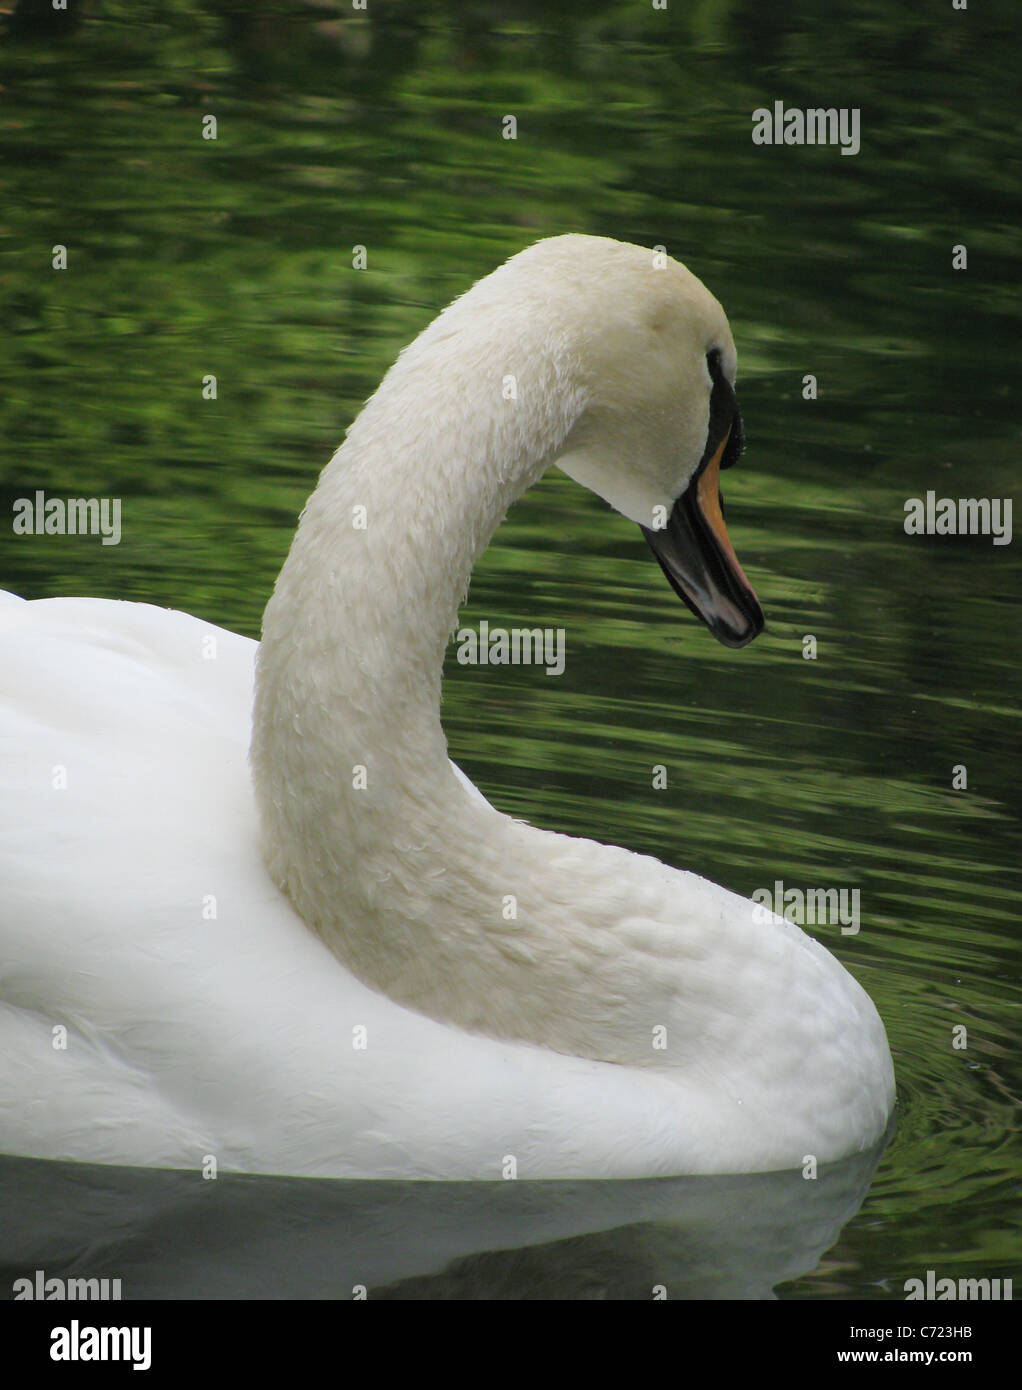 gentle white swan Stock Photo